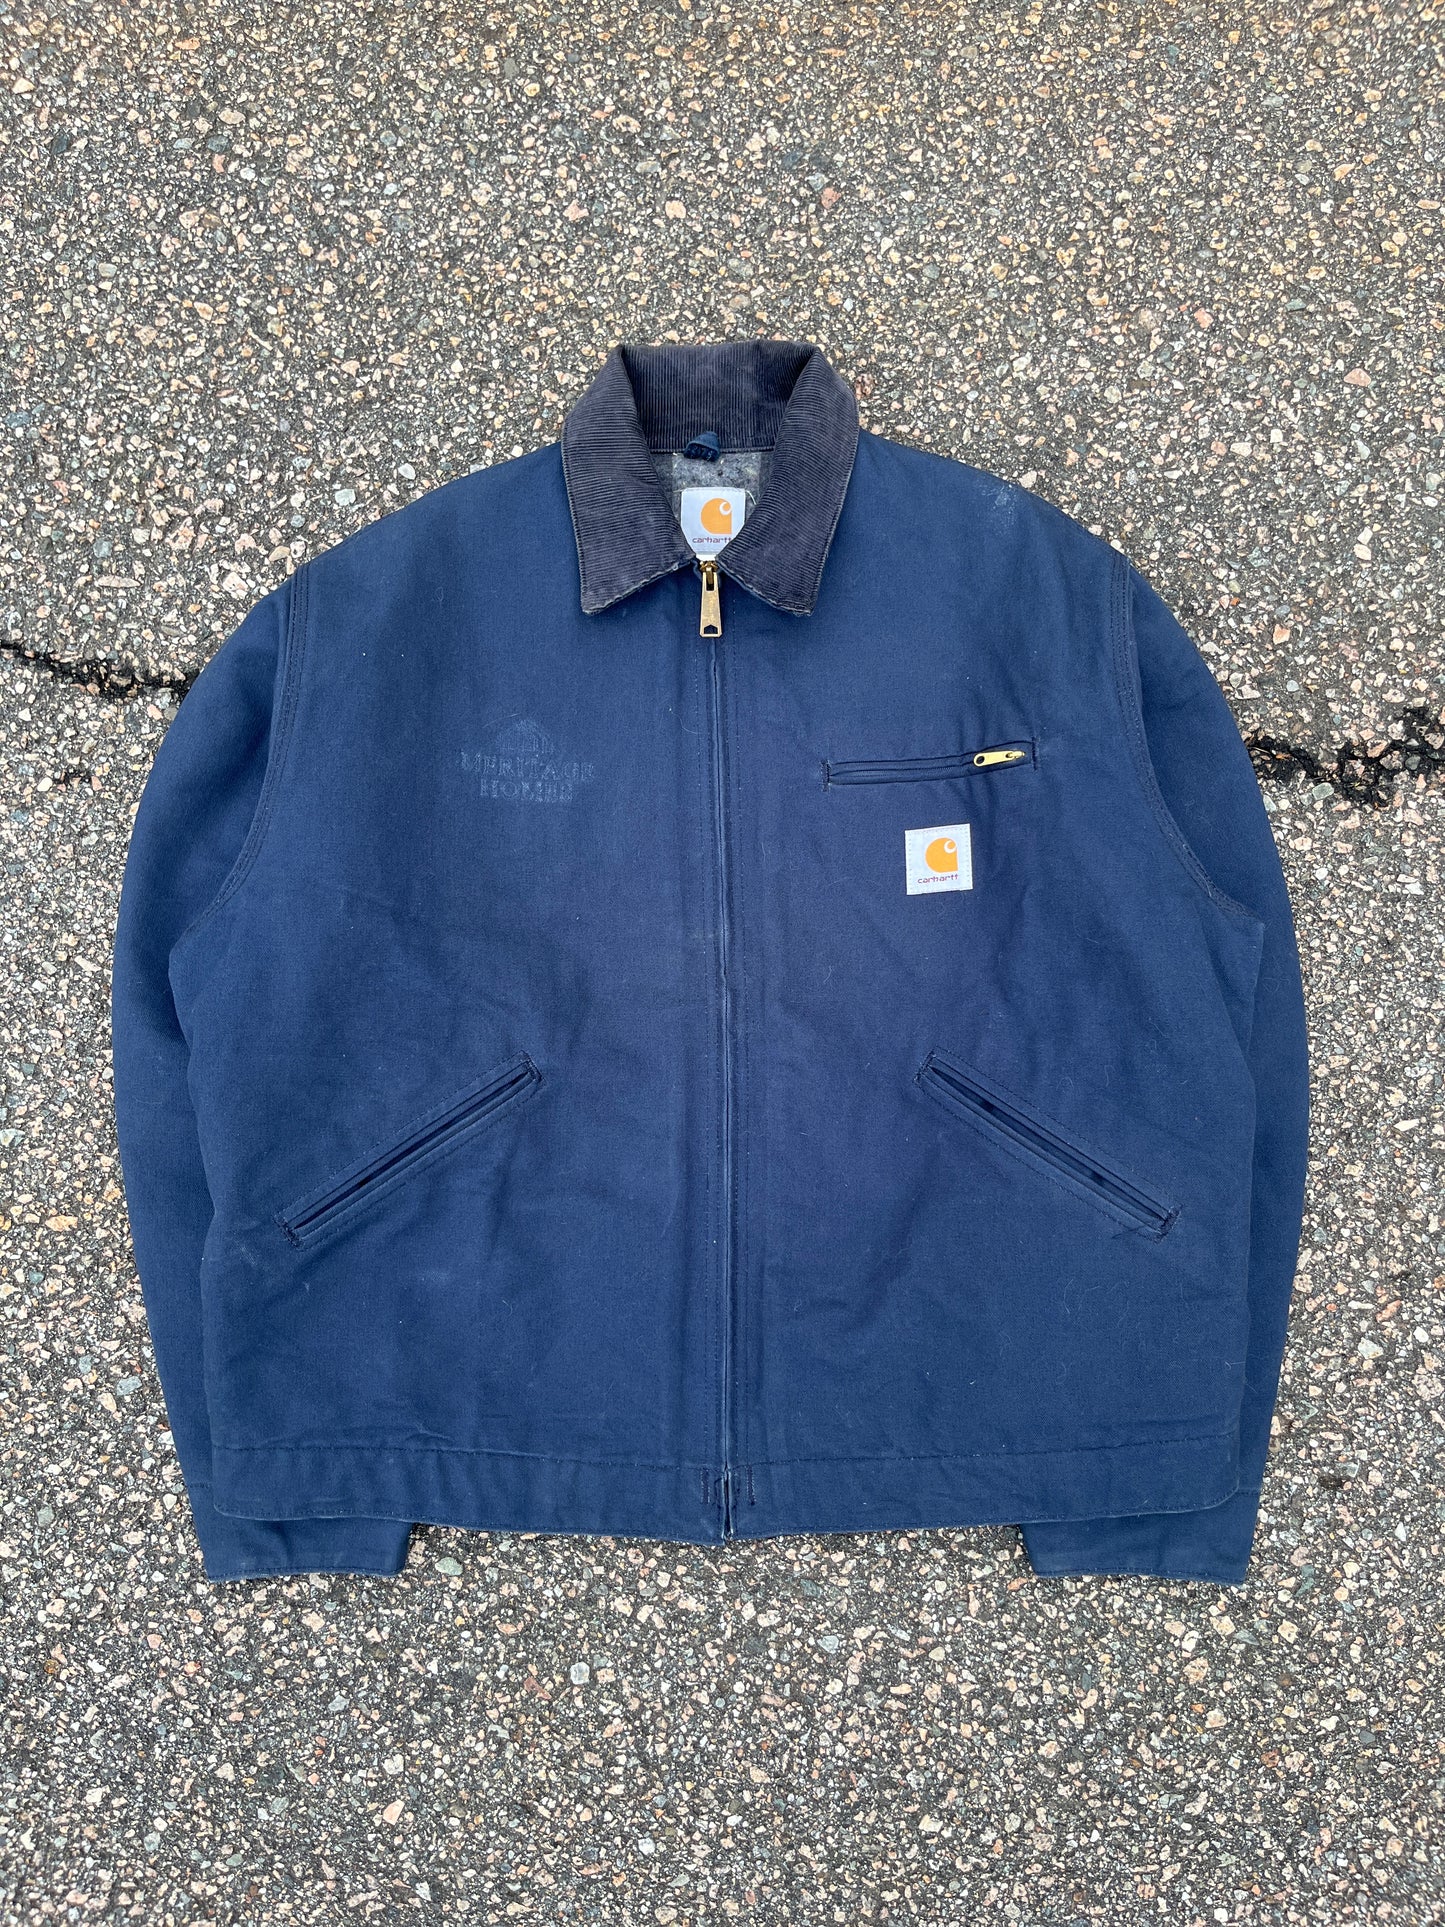 Faded Navy Blue Carhartt Detroit Jacket - Large